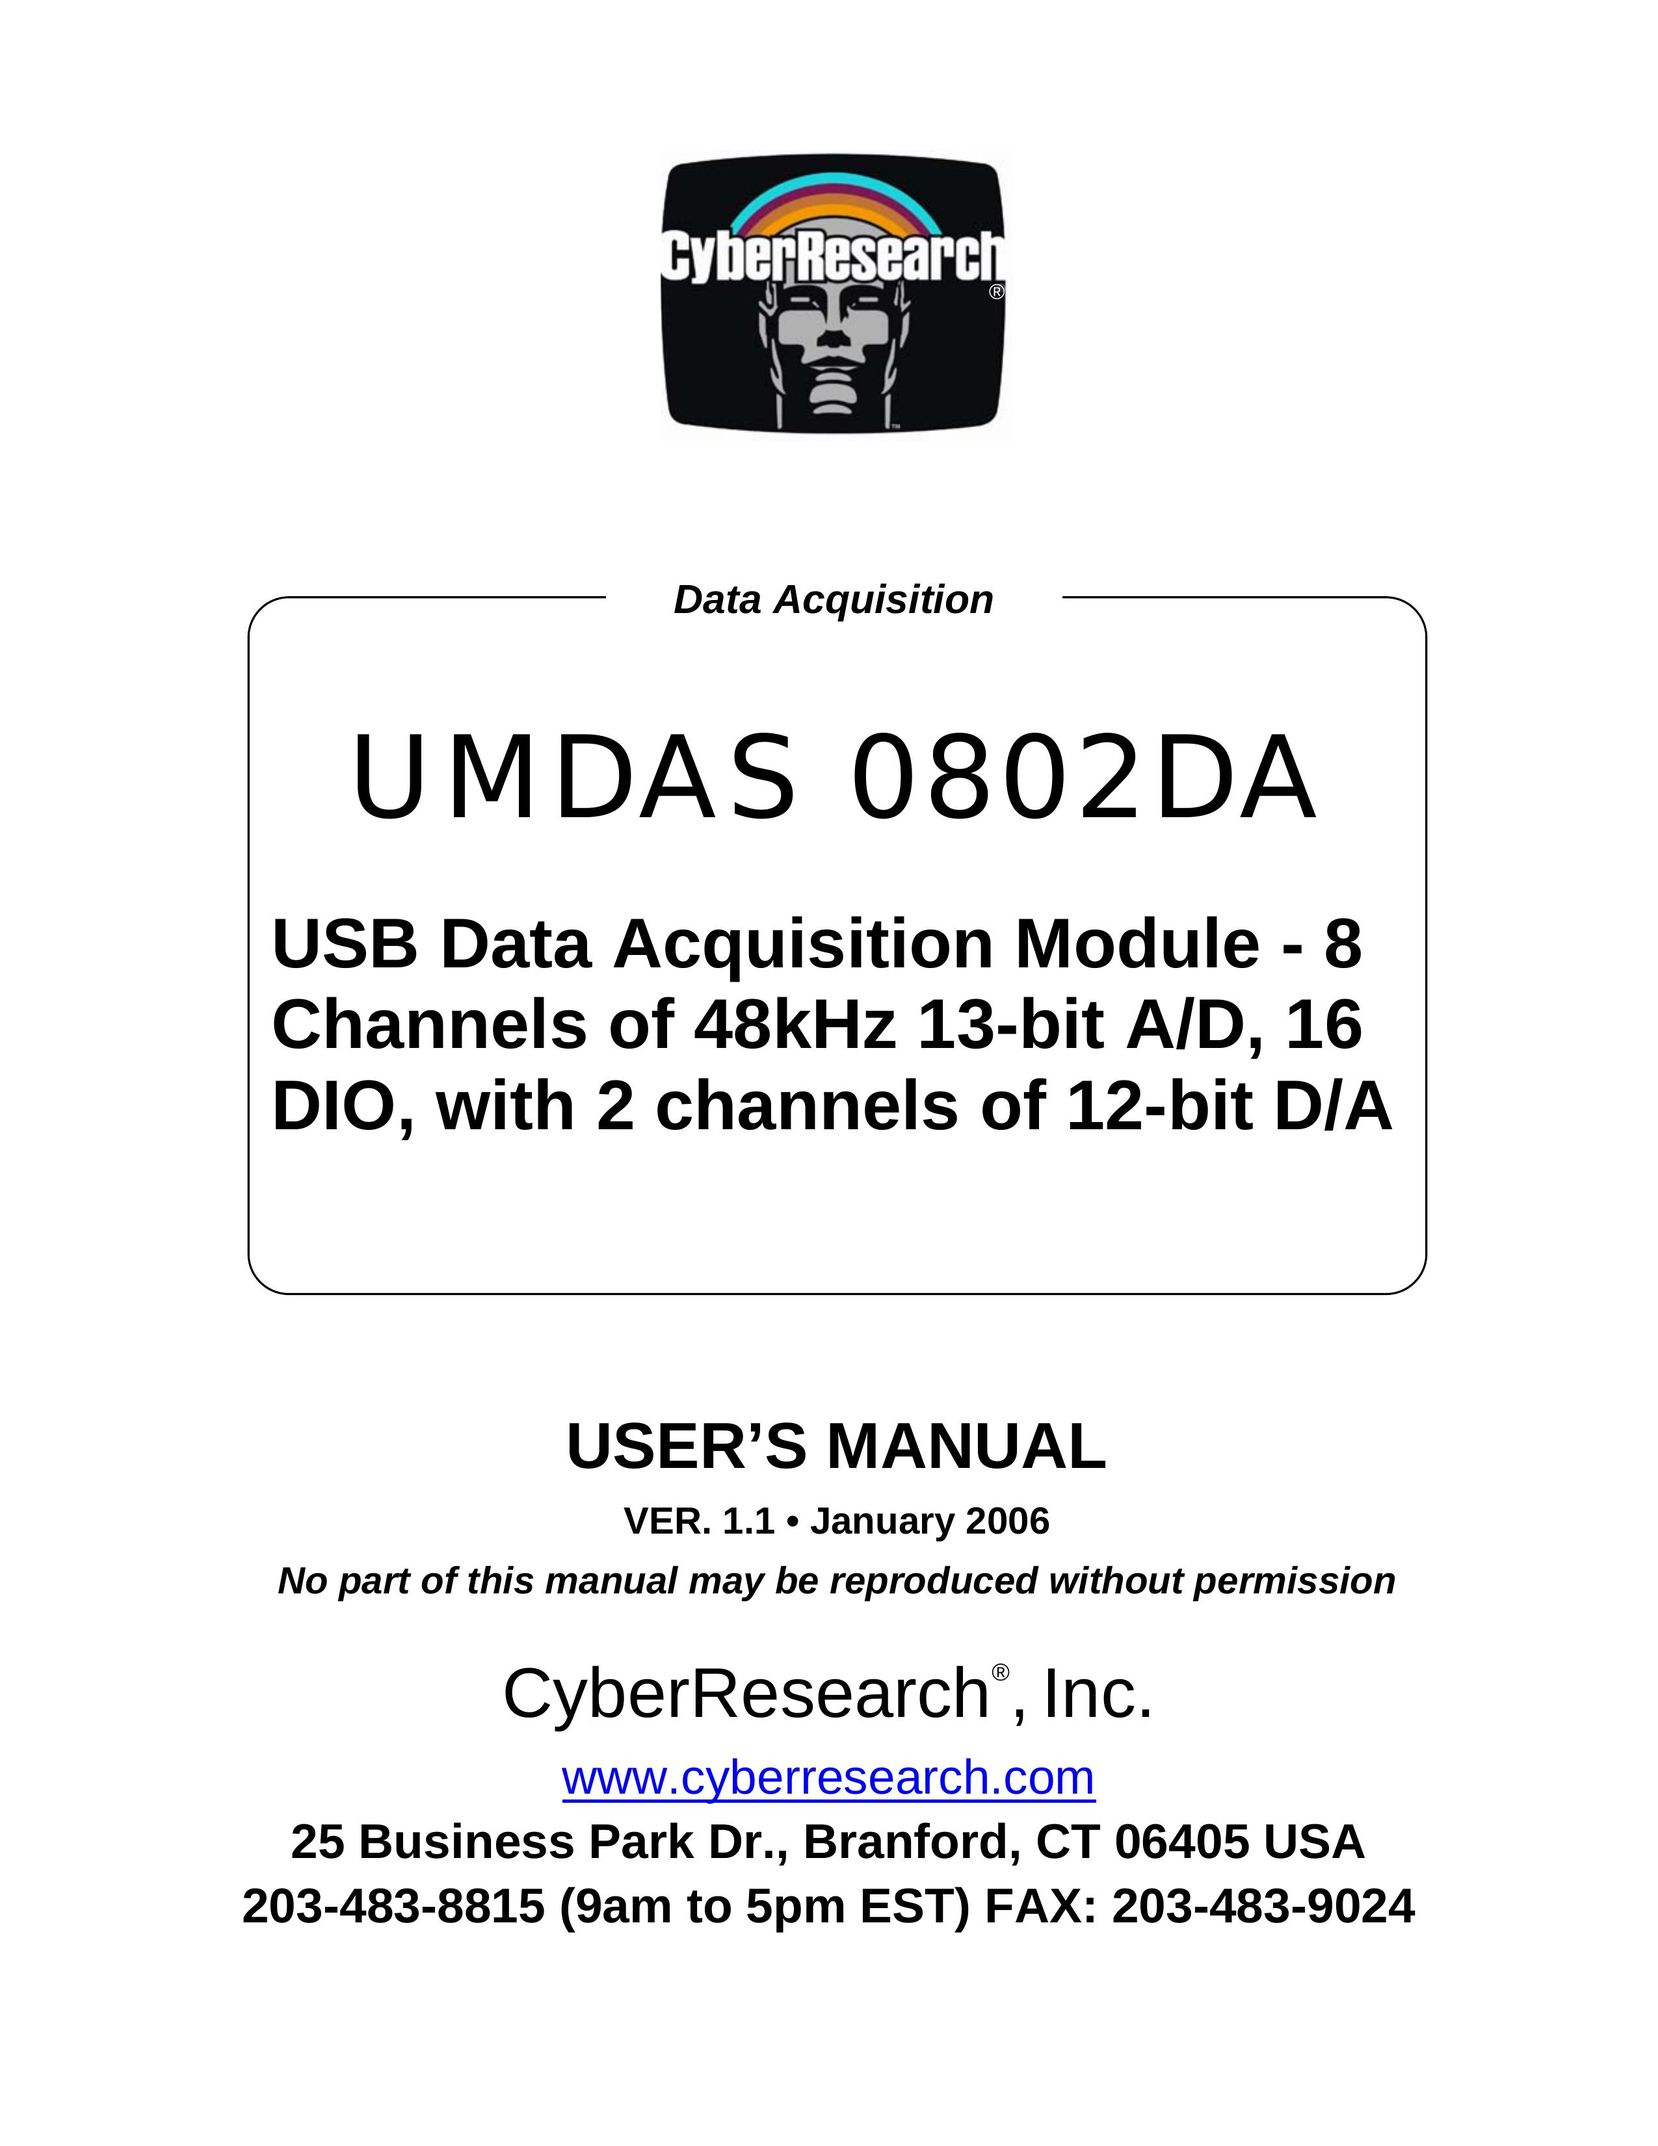 CyberResearch UMDAS 0802DA Personal Computer User Manual